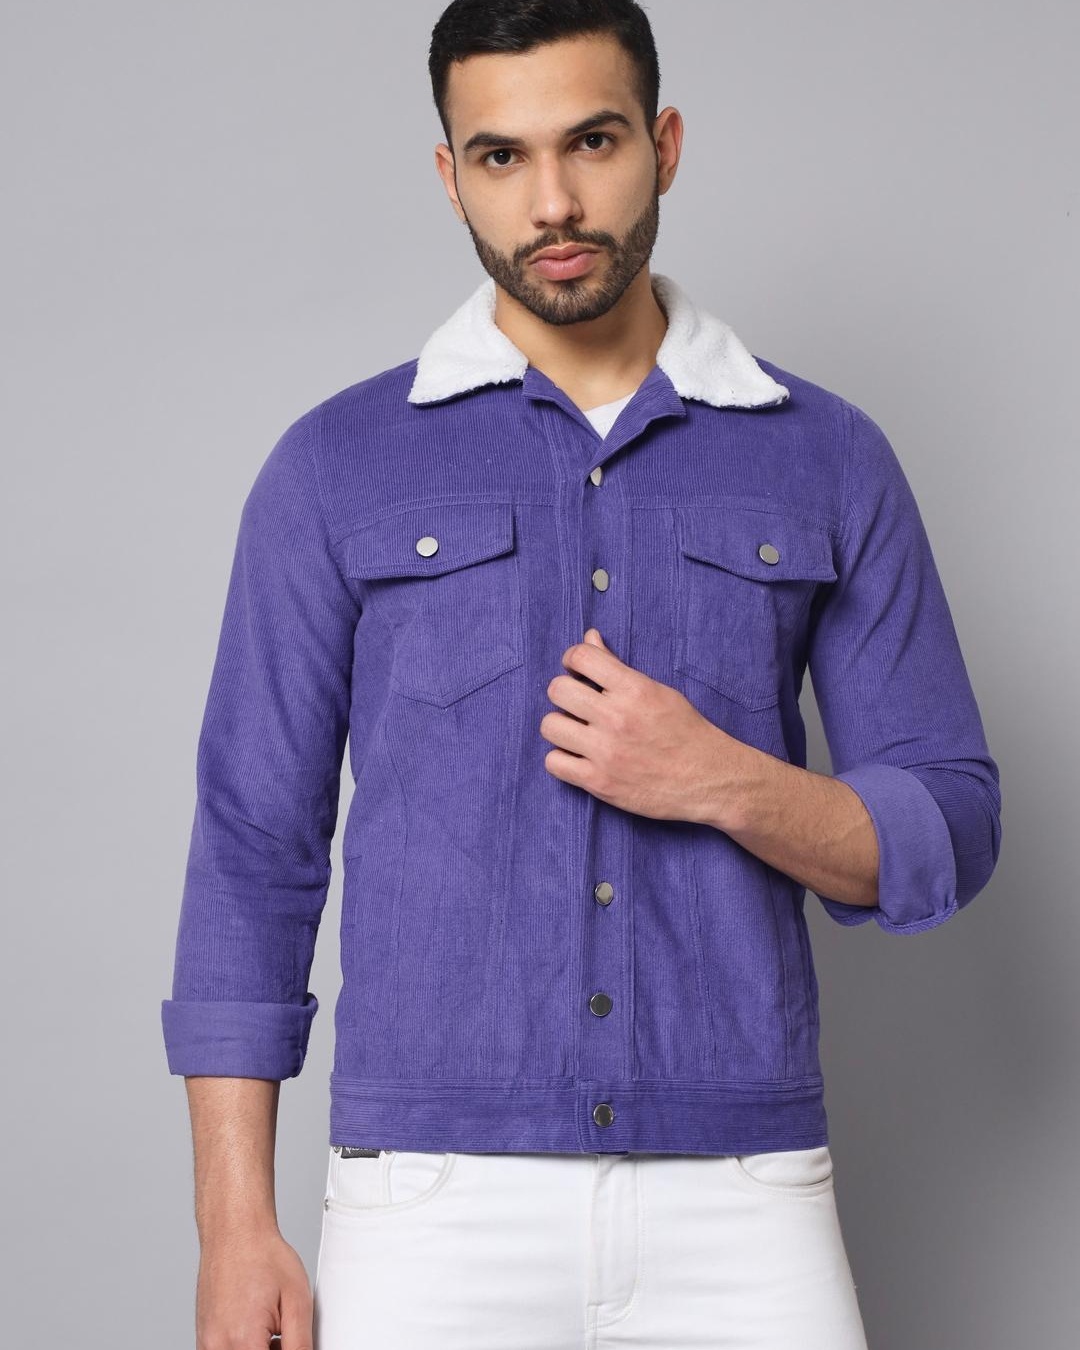 ASOS DESIGN oversized denim jacket in colour block | ASOS